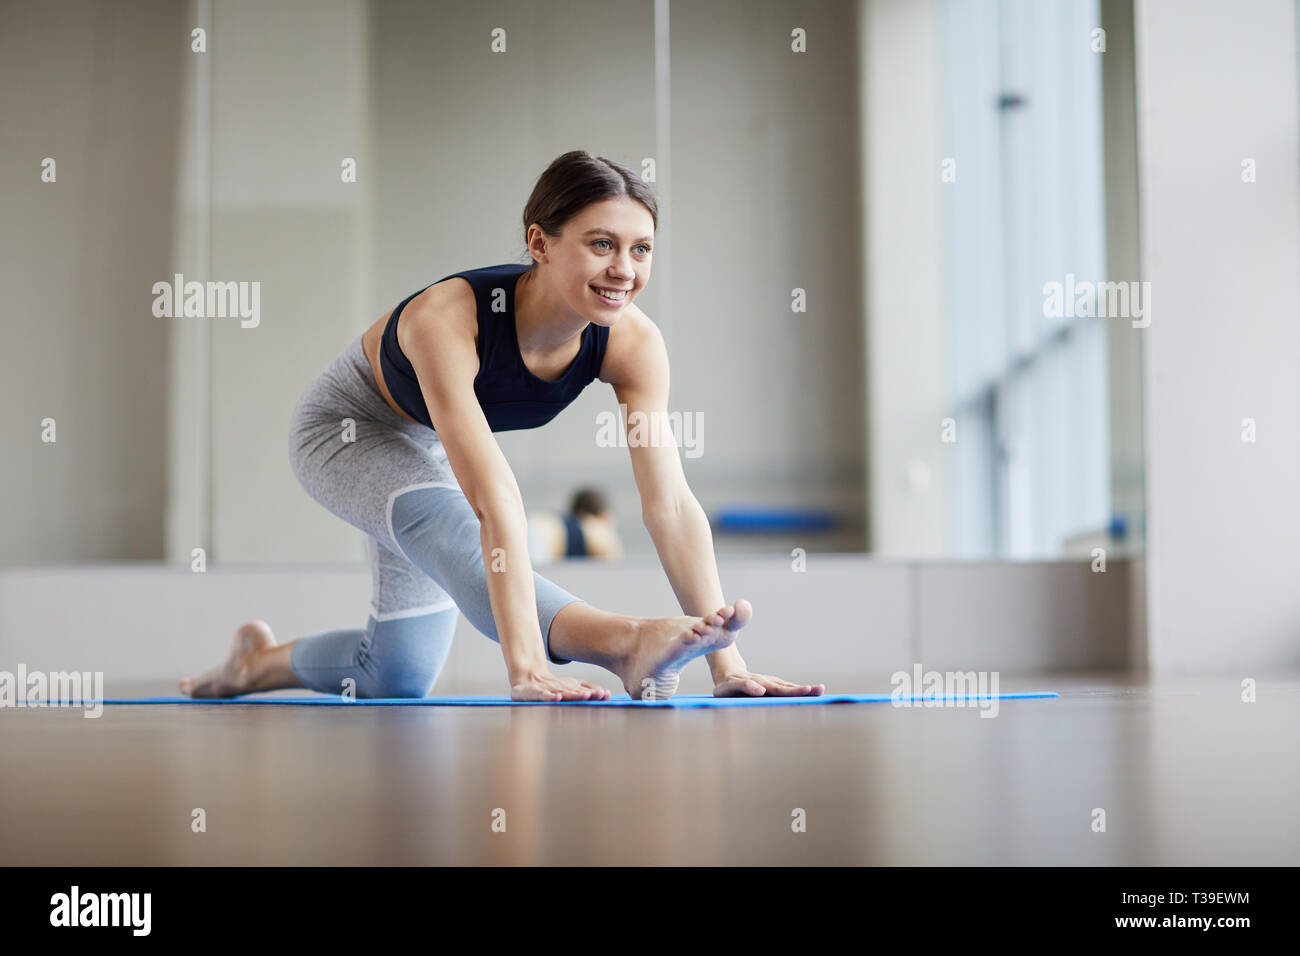 Cheerful woman stretching leg Stock Photo